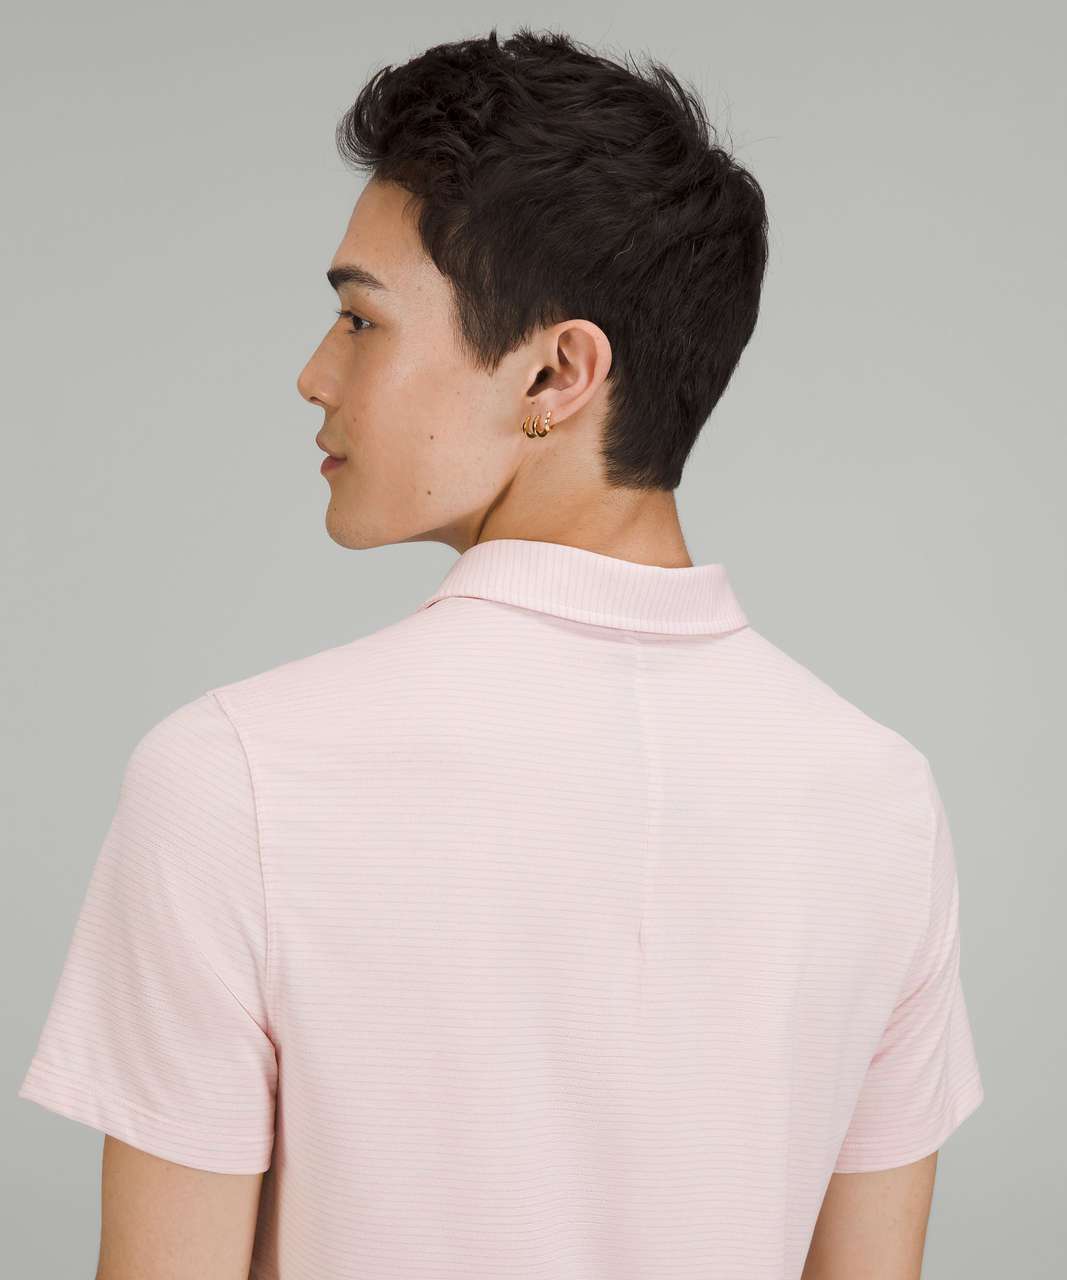 Lululemon Evolution Short Sleeve Polo Shirt - Heathered Strawberry Milkshake